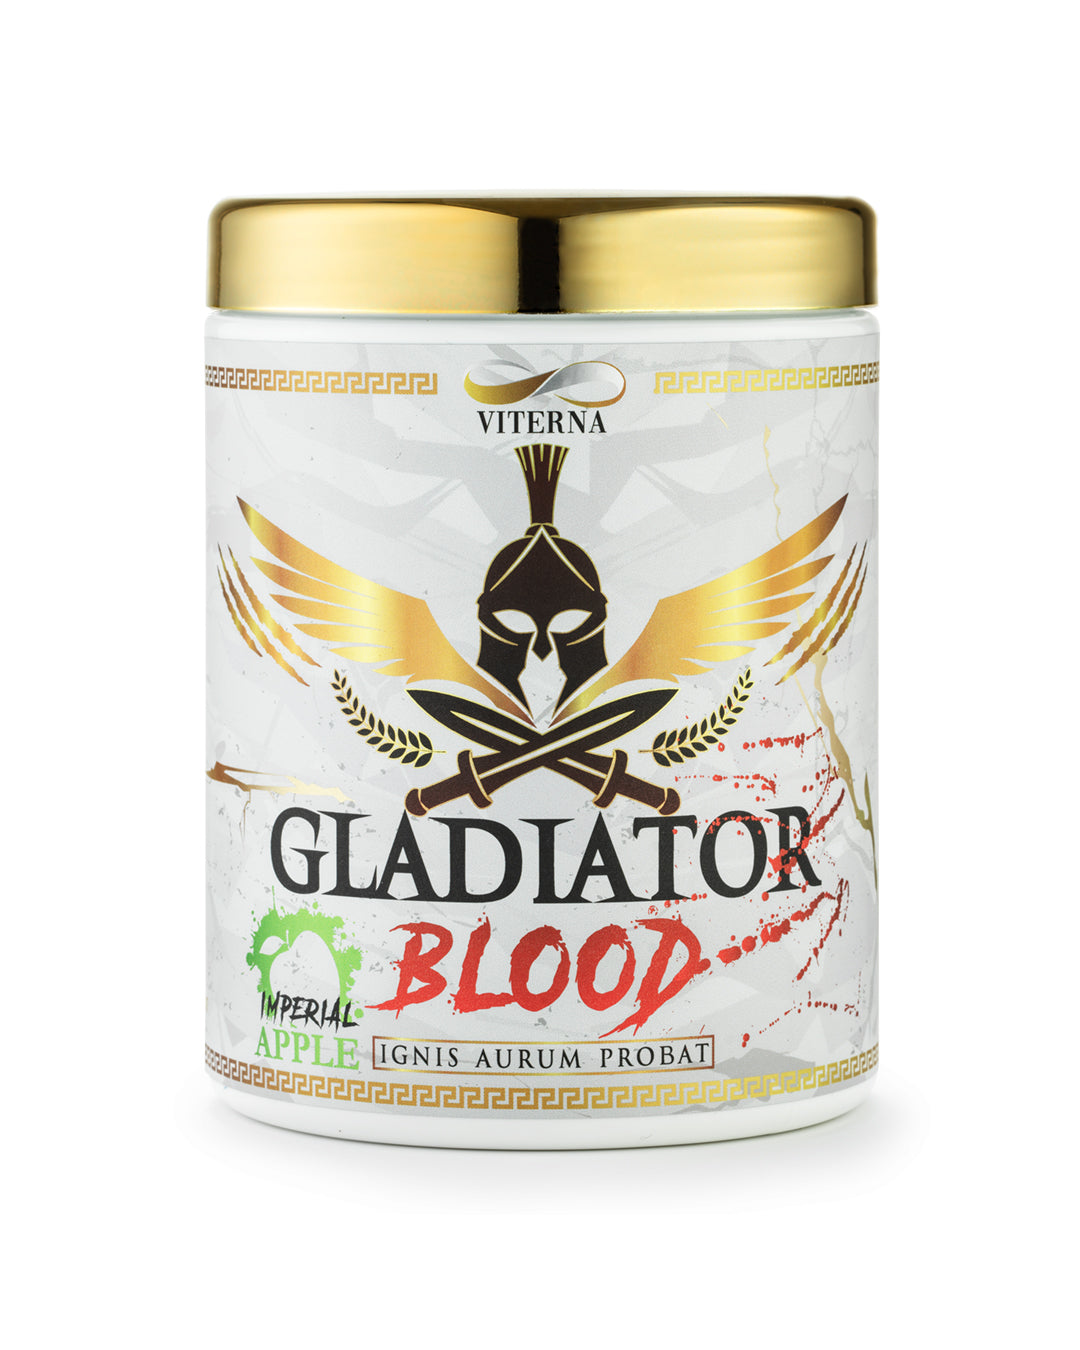 Viterna Gladiator Blood 460g - Imperial Apple